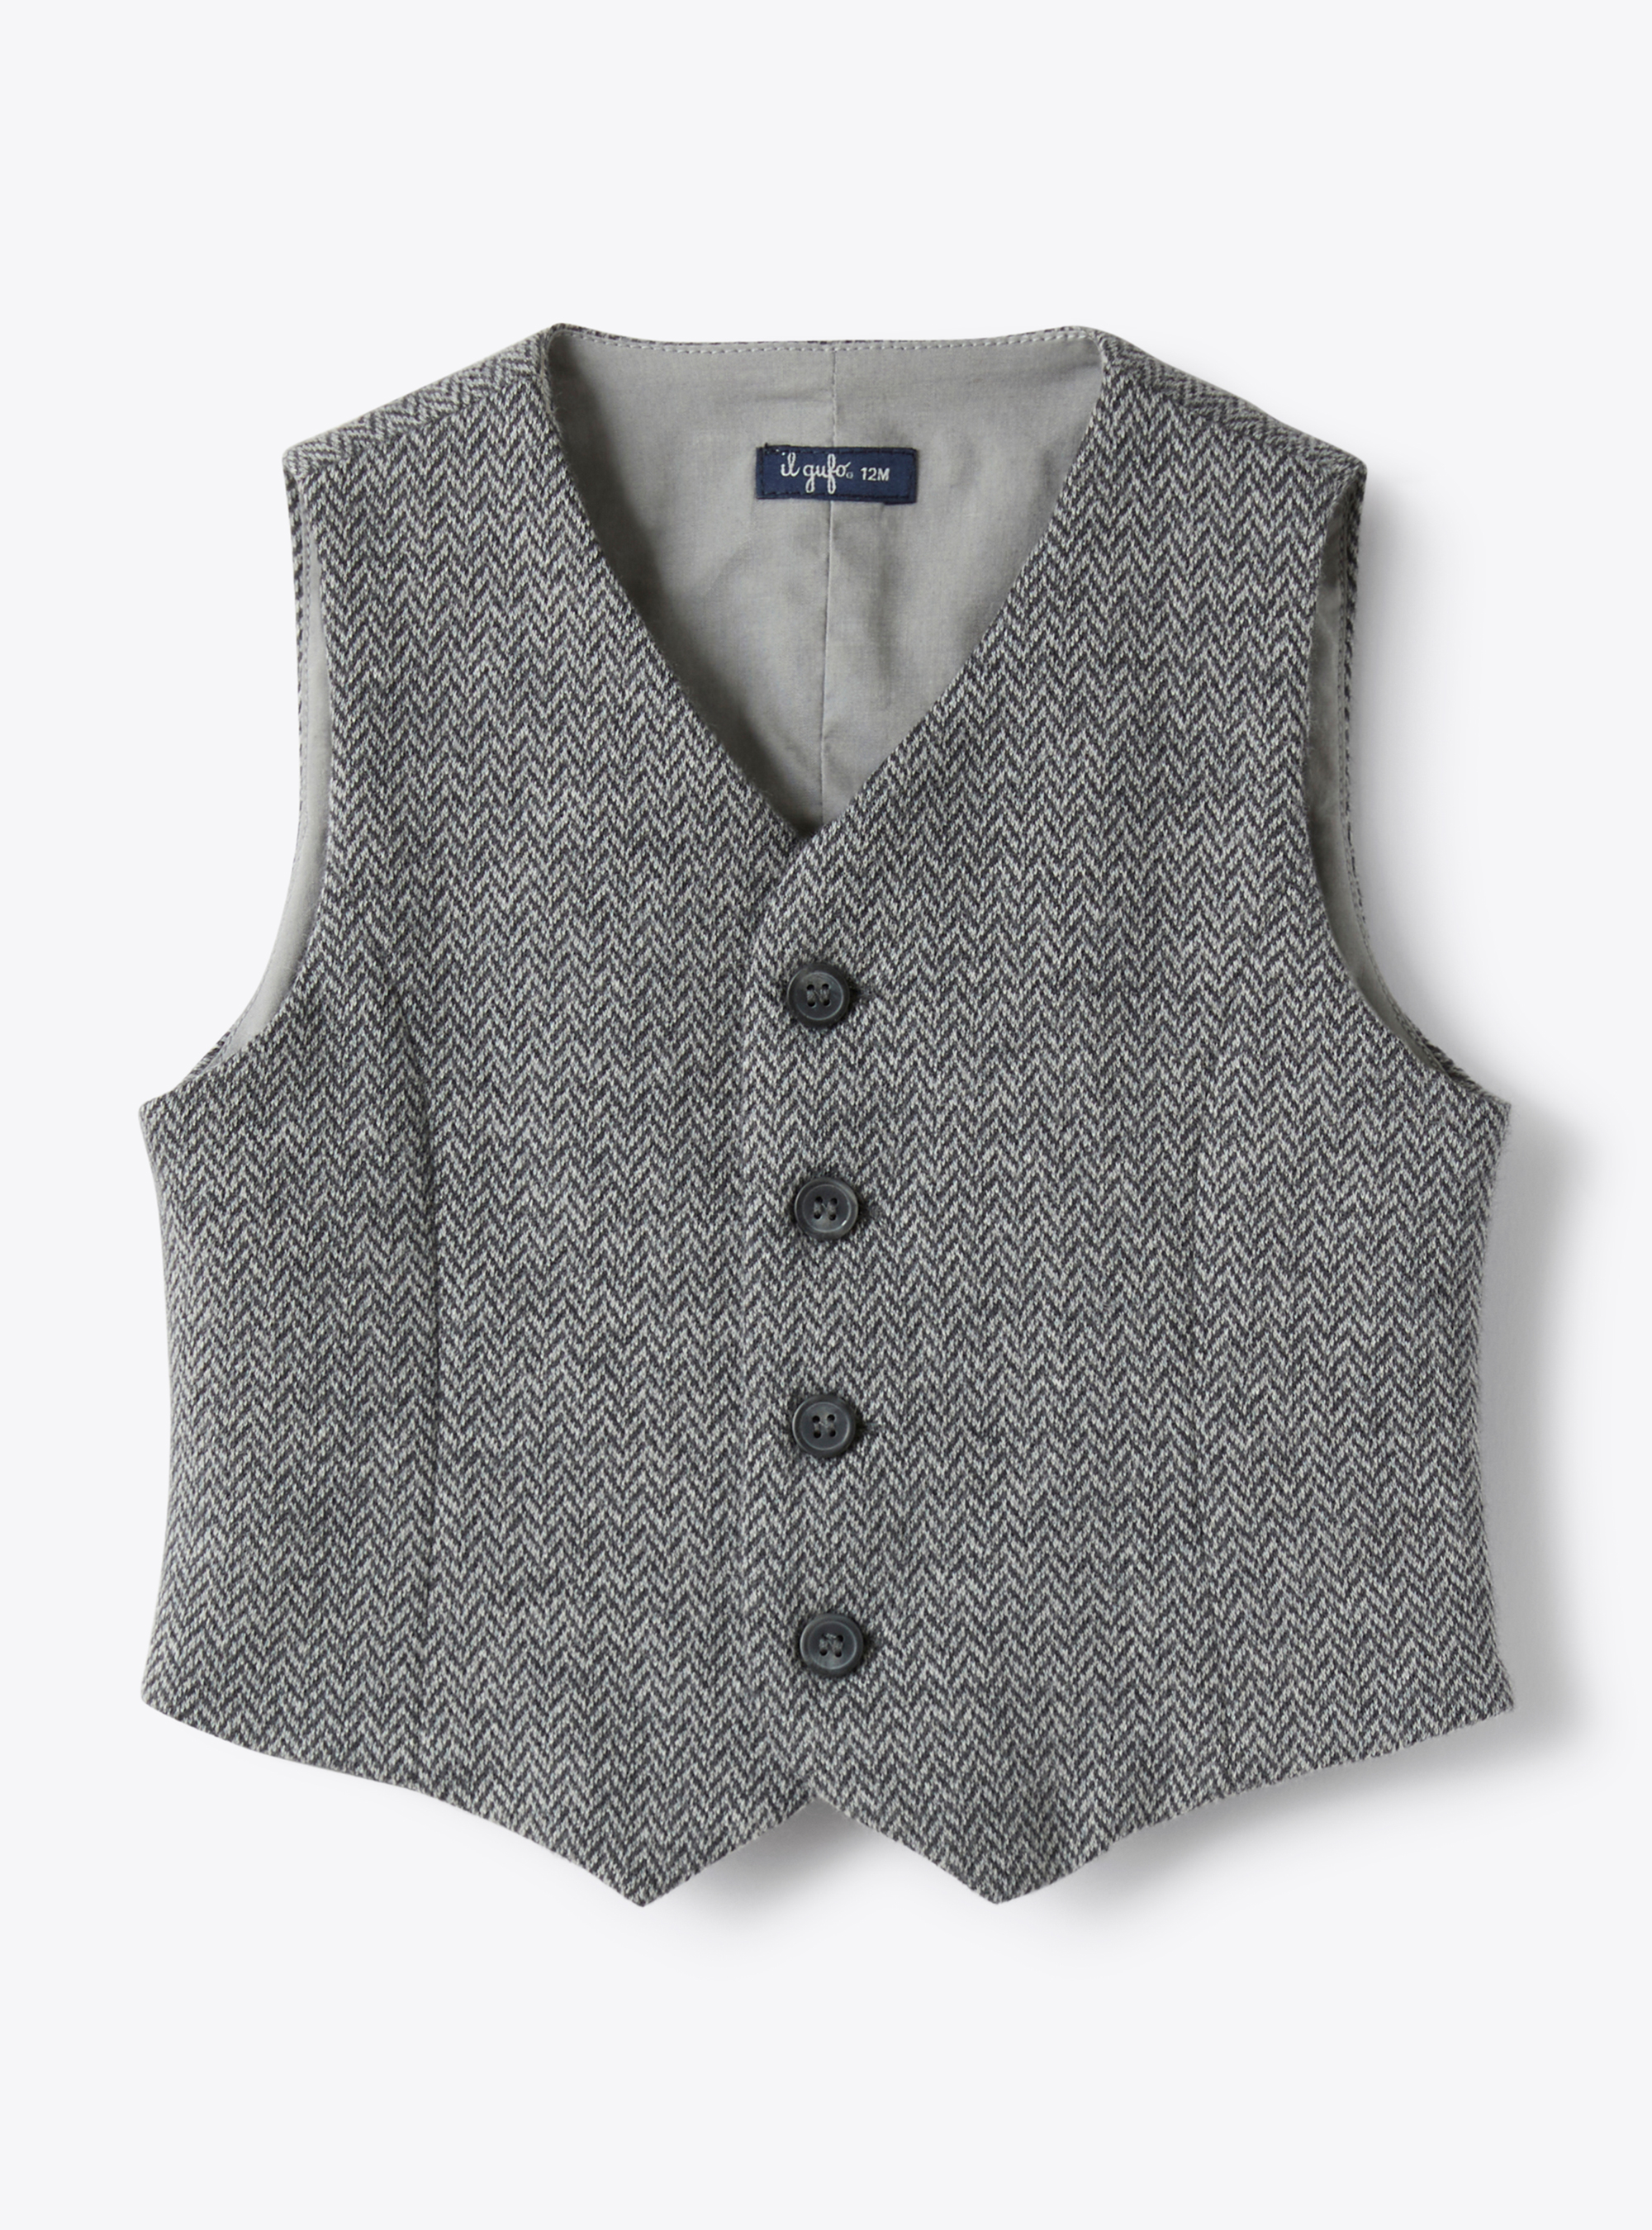 Gilet in herringbone-patterned cotton - Jackets - Il Gufo